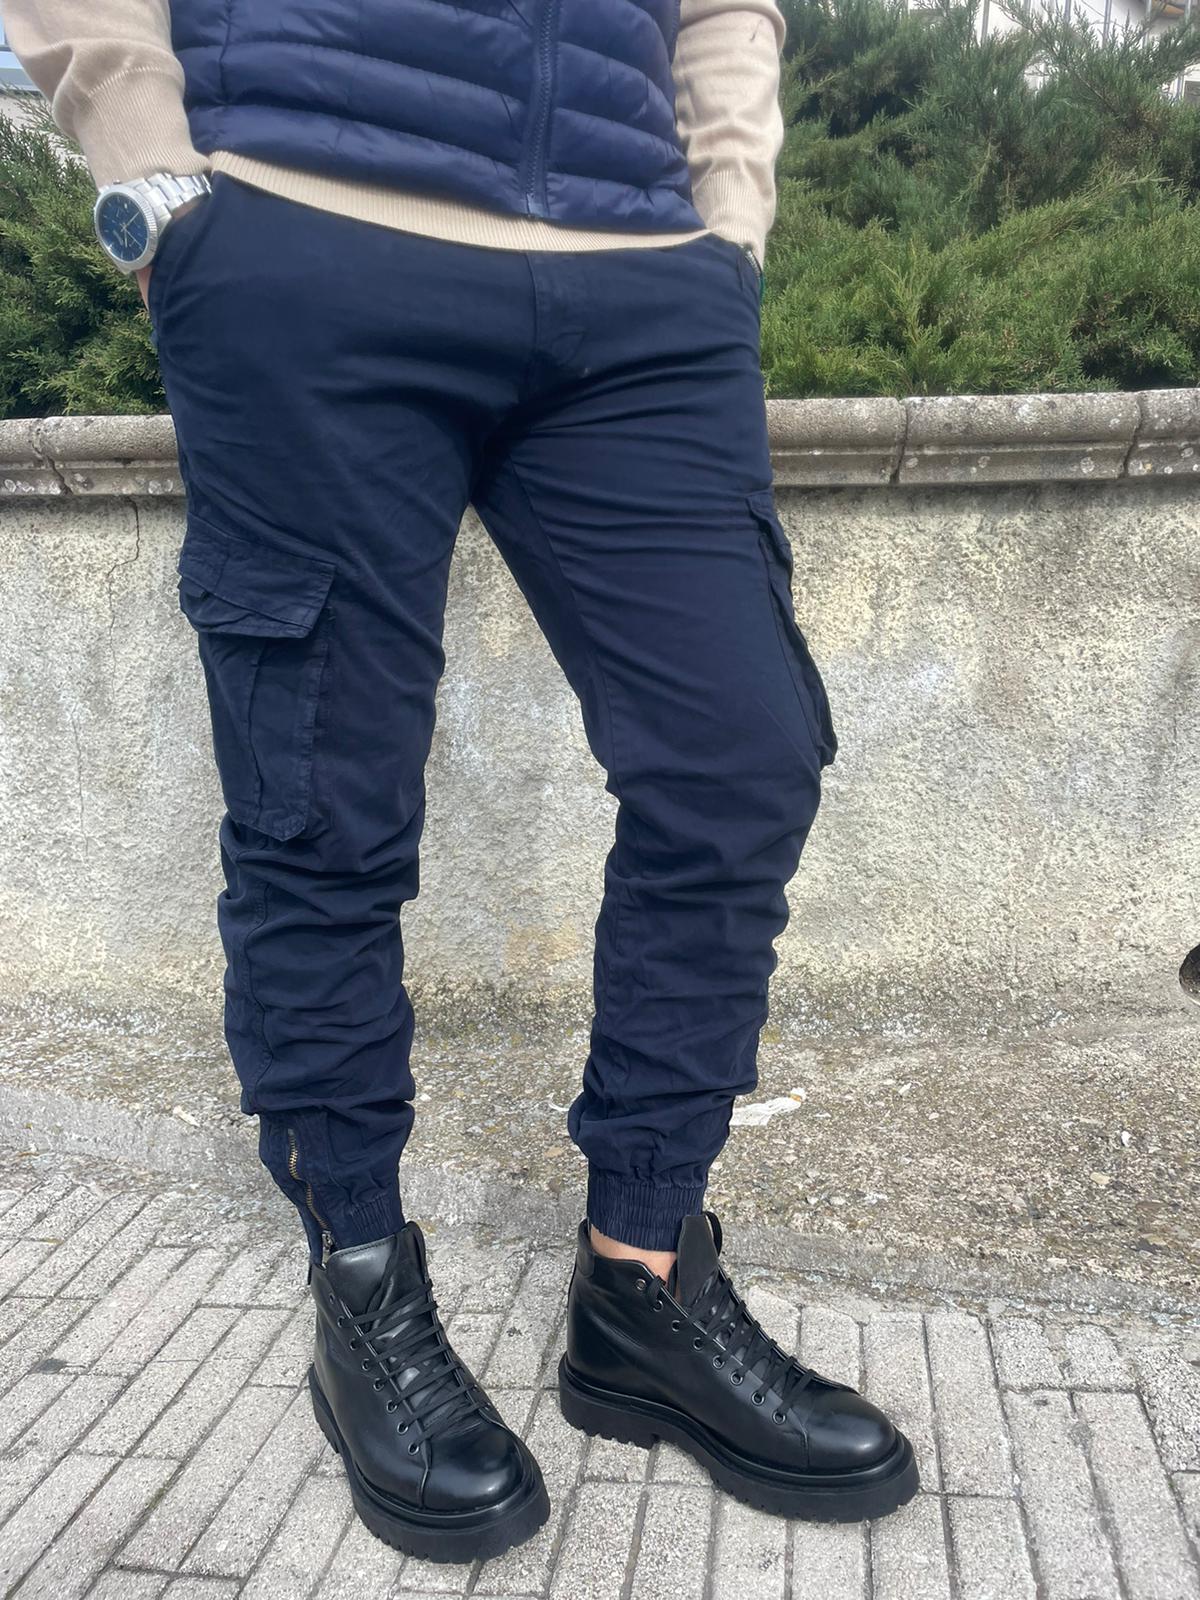 Pantalone cargo uomo cotone con elastico e zip